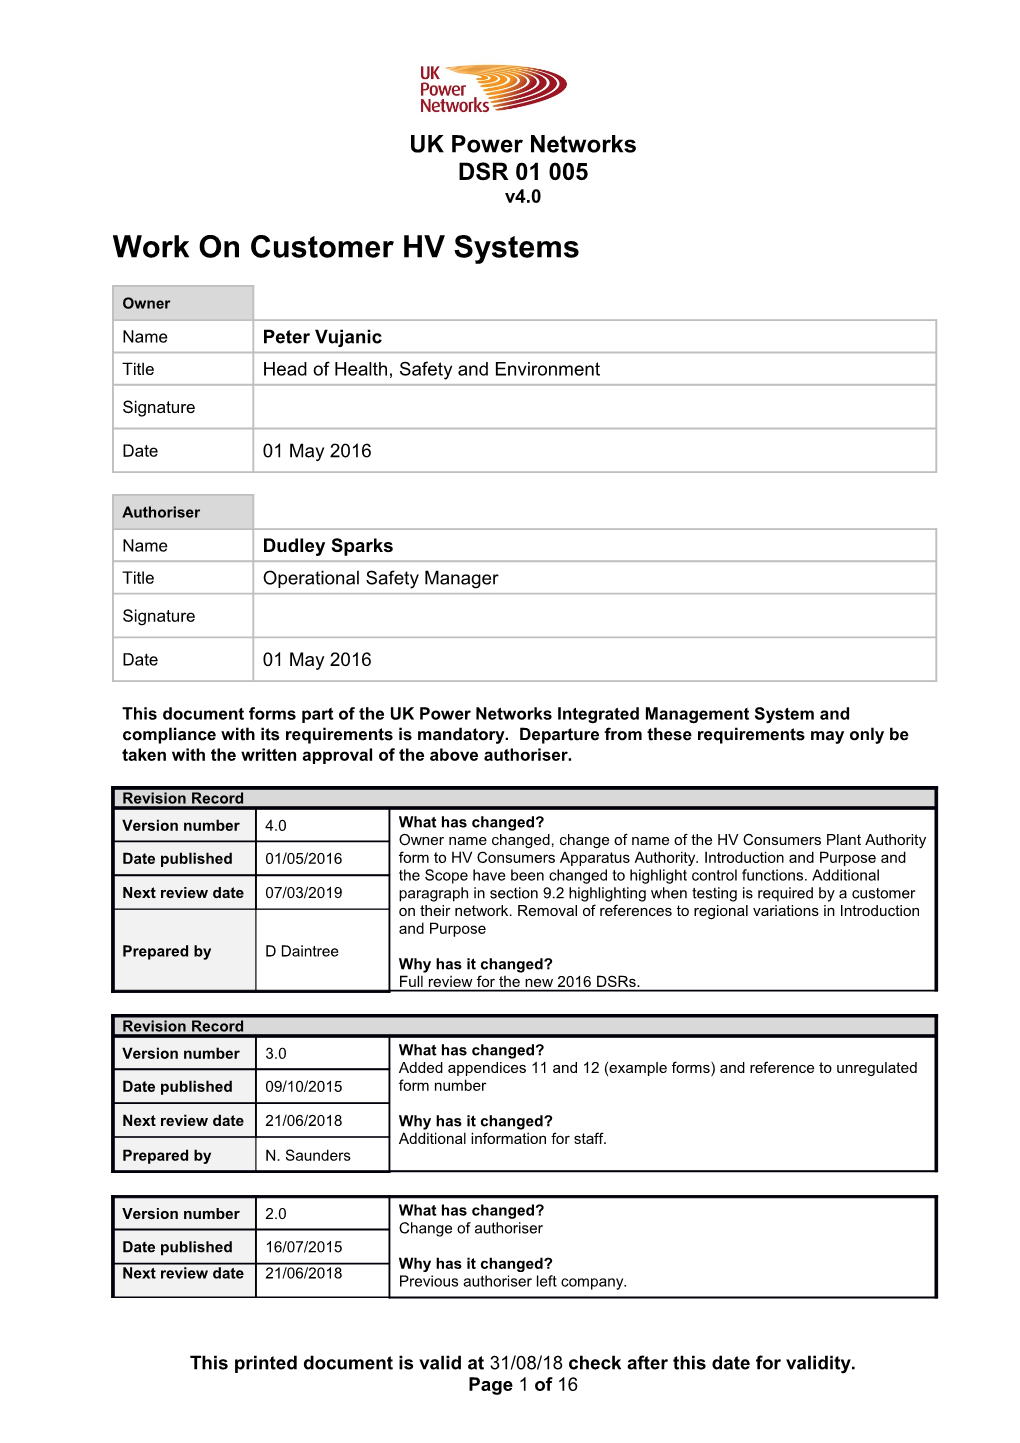 DSR 01 005 Work on Customer HV Systems